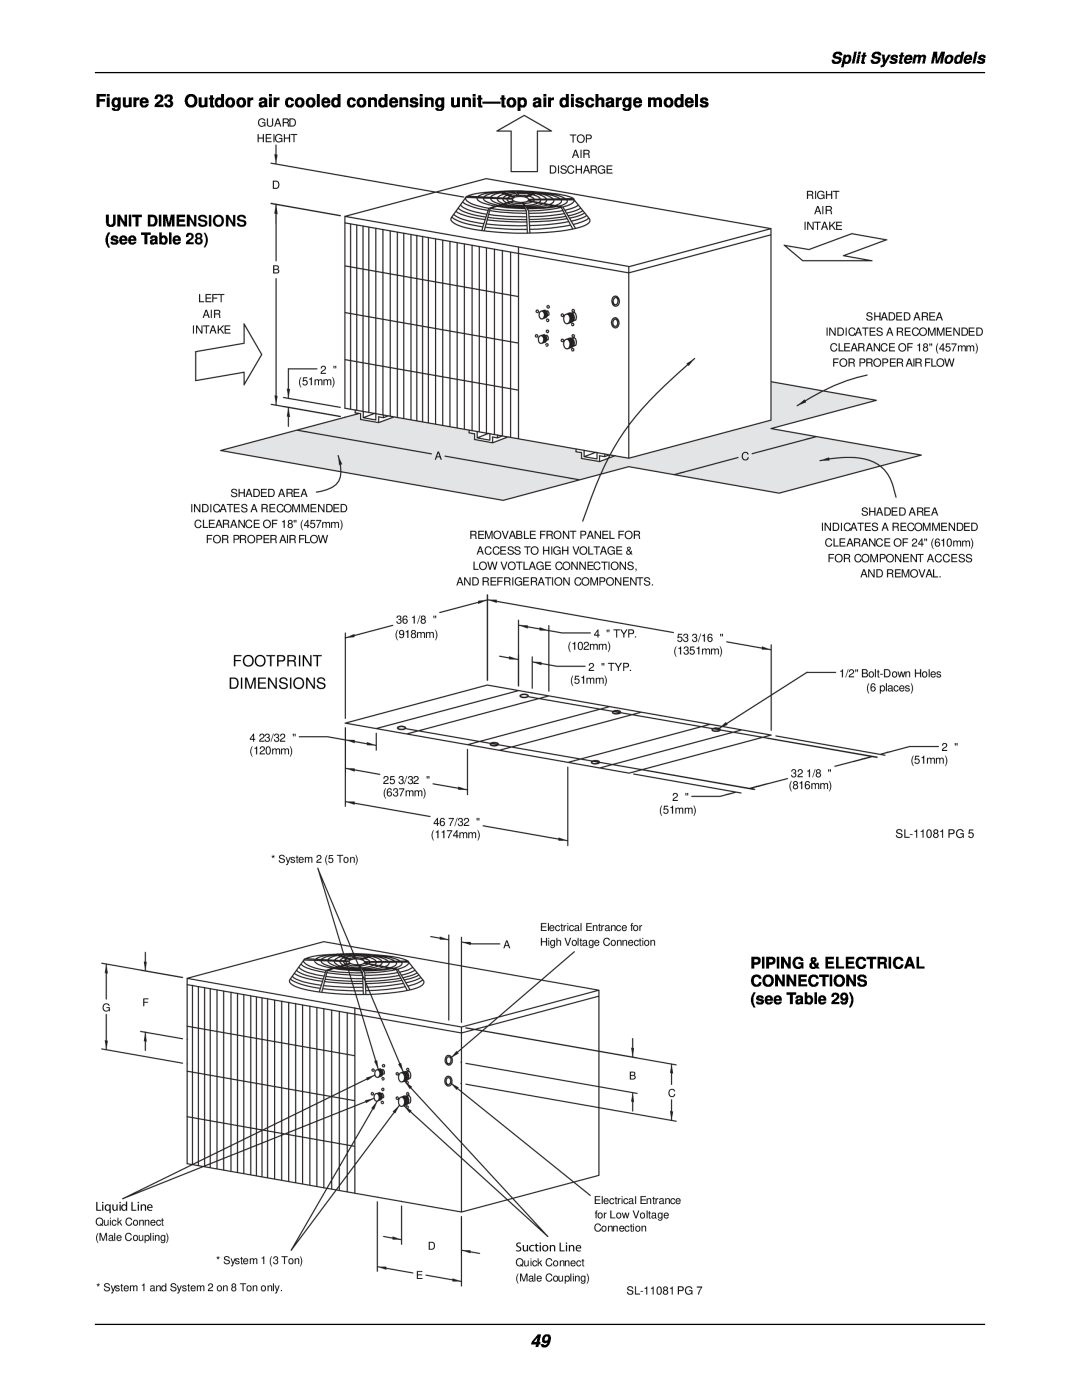 Liebert 3000 installation manual Footprint Dimensions, Split System Models, UNIT DIMENSIONSINTAKE see Table 